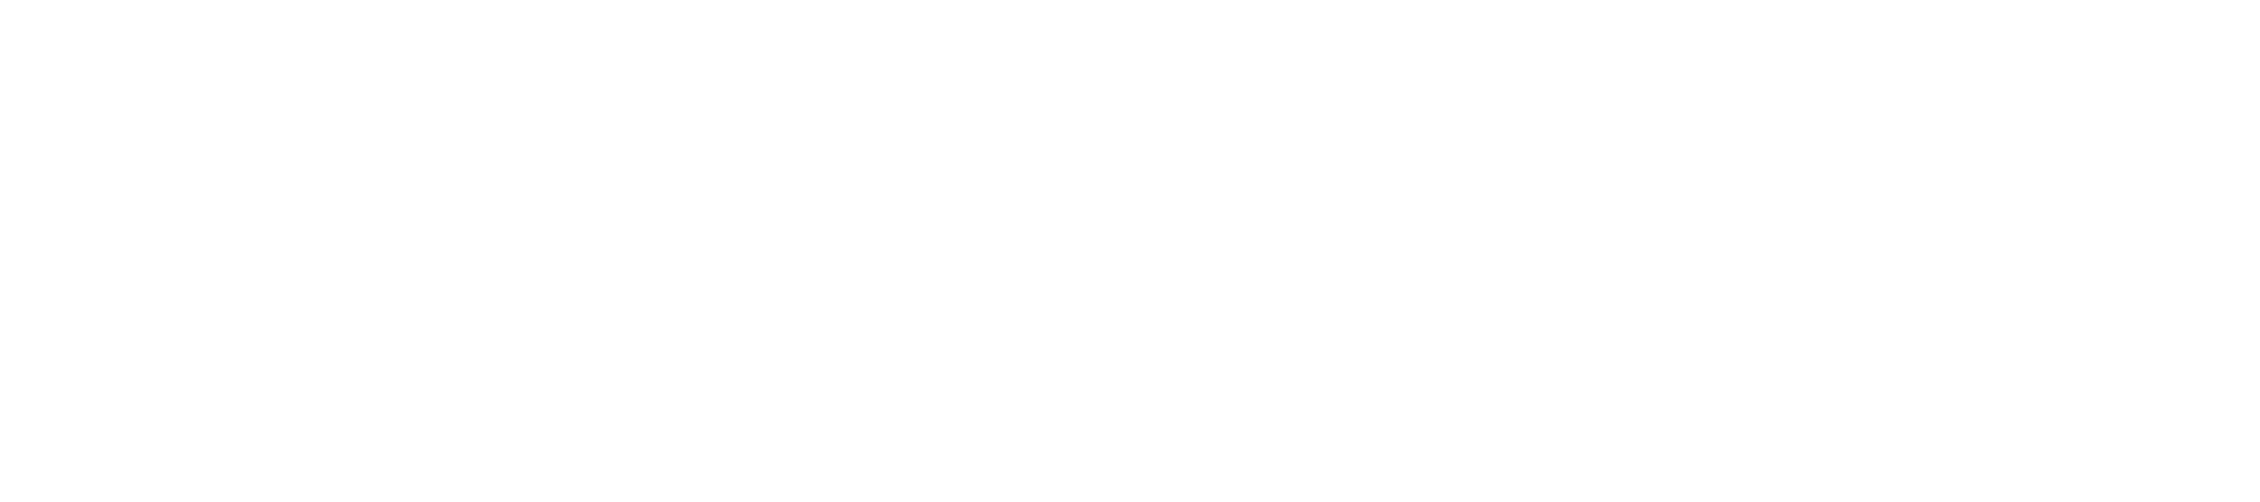 New York State Of Opportunity Empire State Development Logo